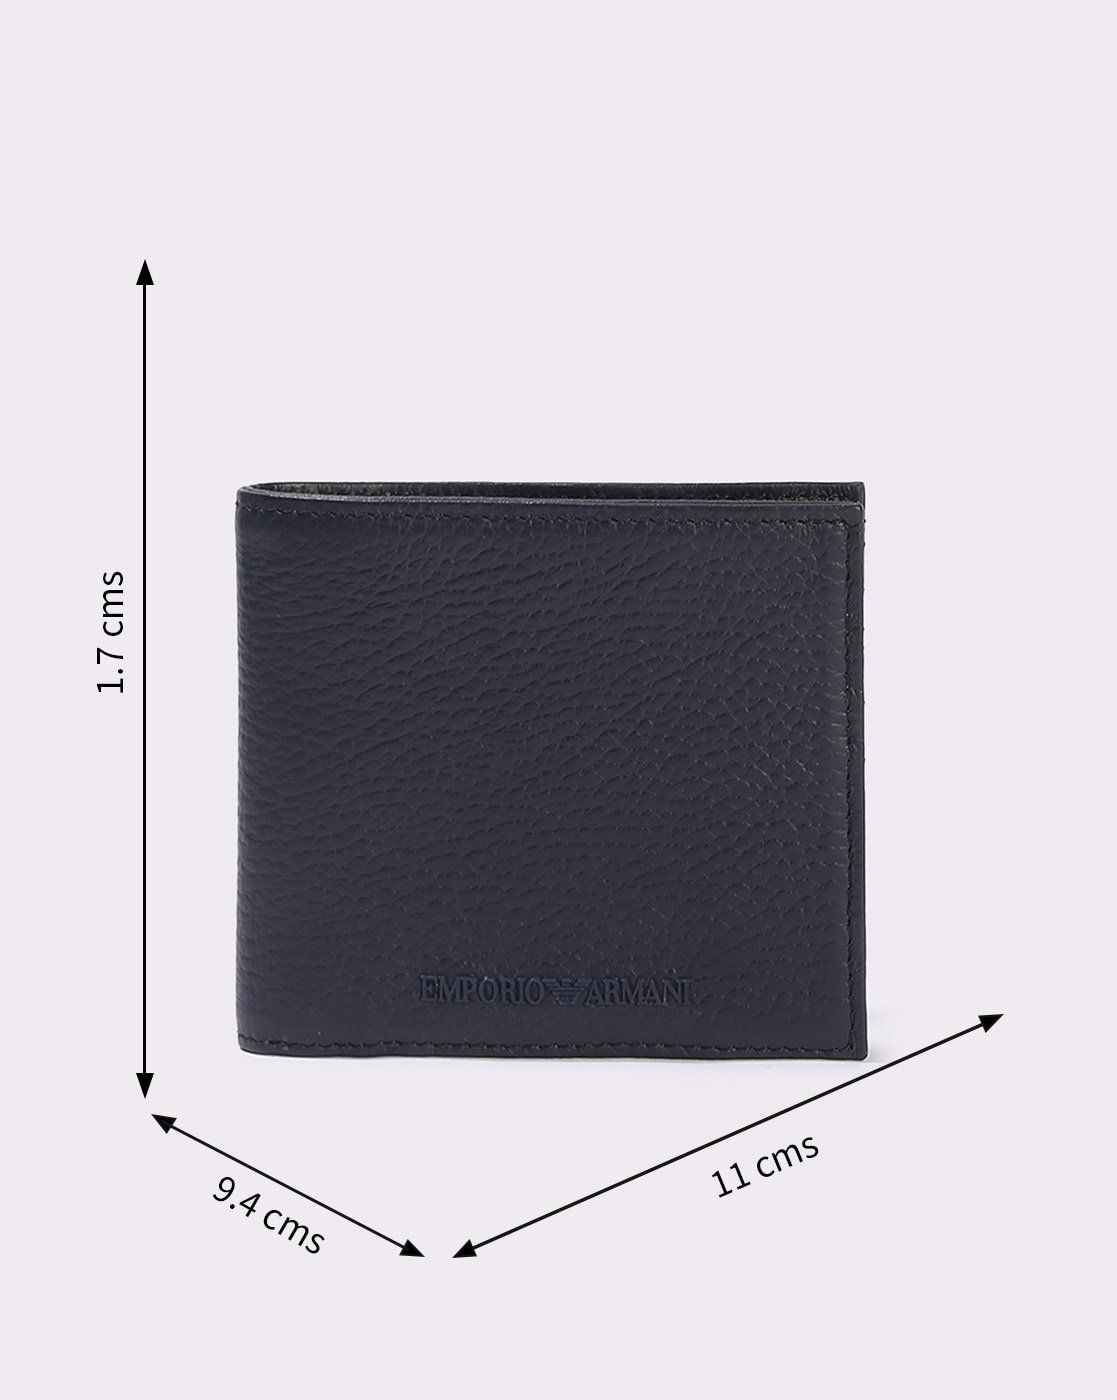 Emporio Armani Black Leather Signature Men's Bifold Wallet Coin Pocket |  Wallet, Leather wallet mens, Wallet men